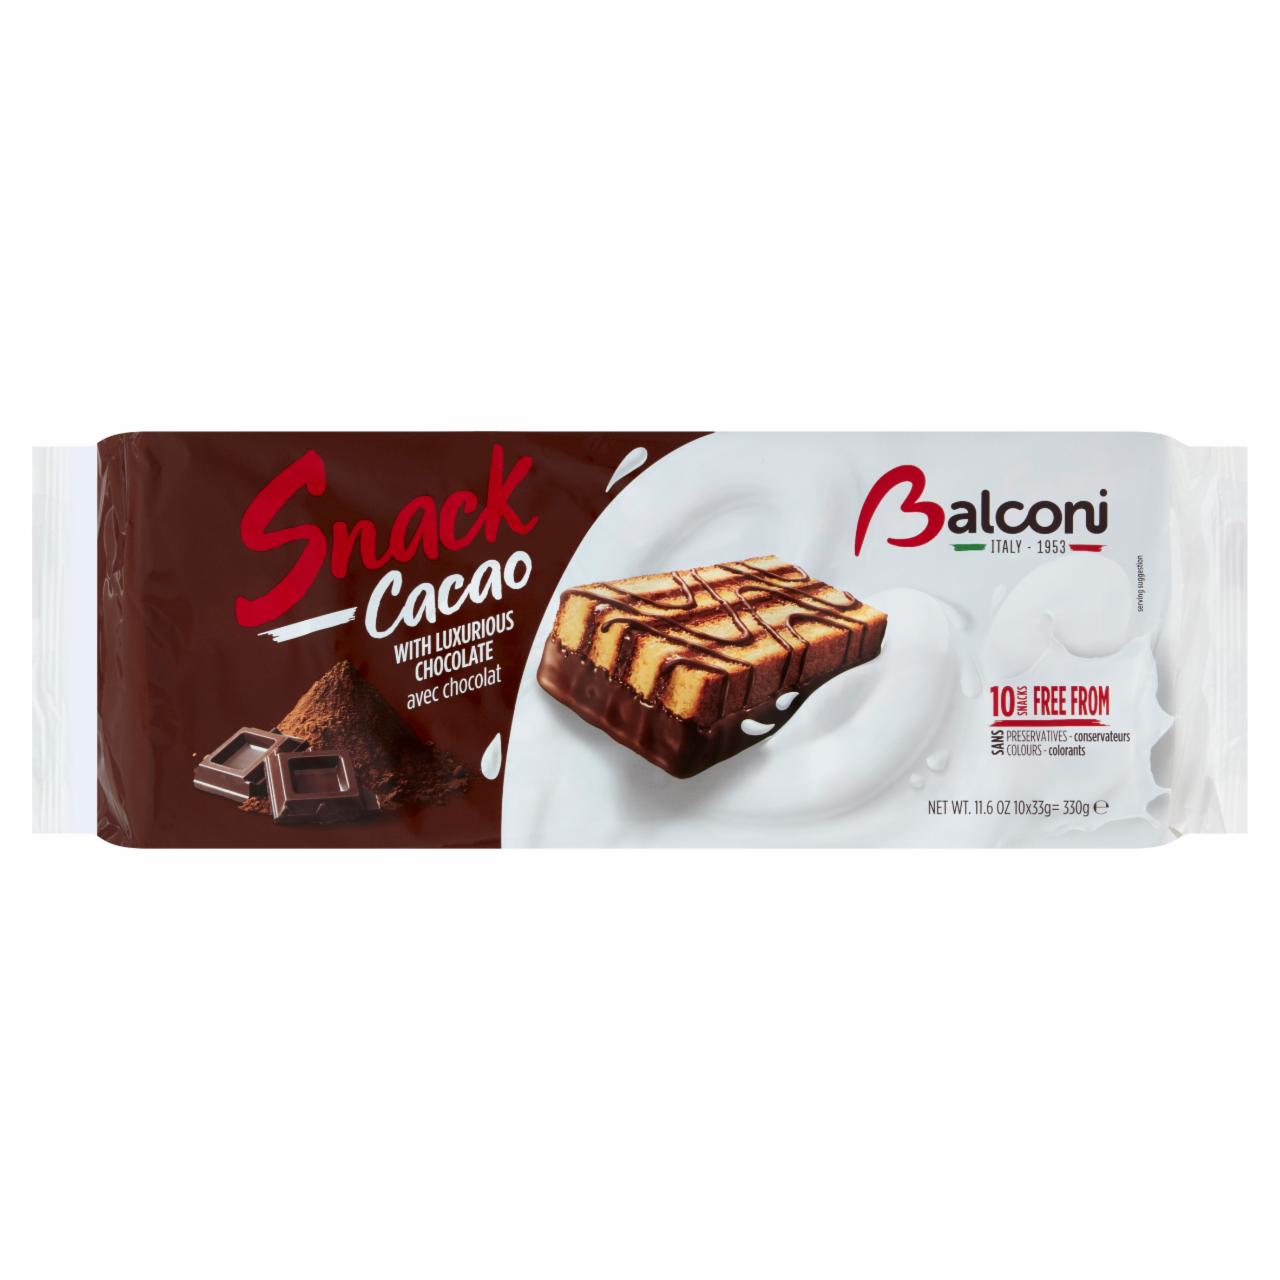 Képek - Balconi Snack Cacao piskóta szelet zsírszegény kakaós bevonómasszával 10 x 33 g (330 g)